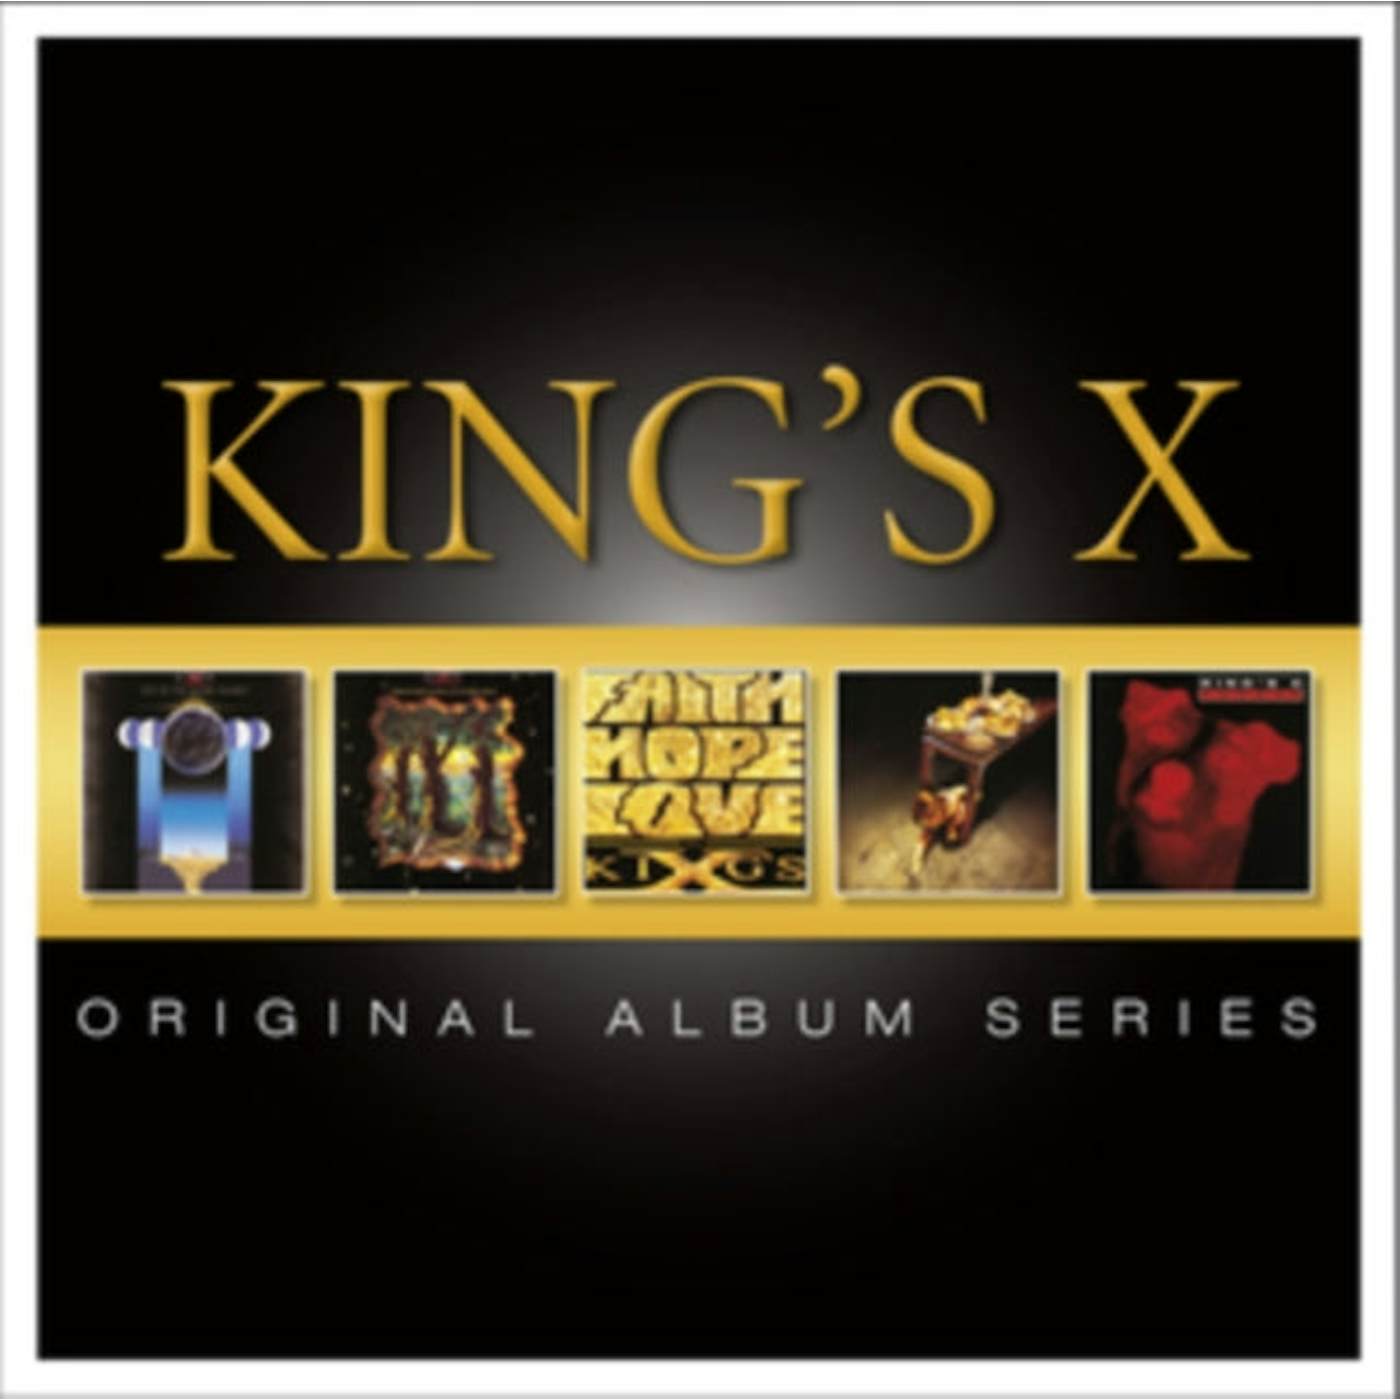 King's X CD - Original Album Series